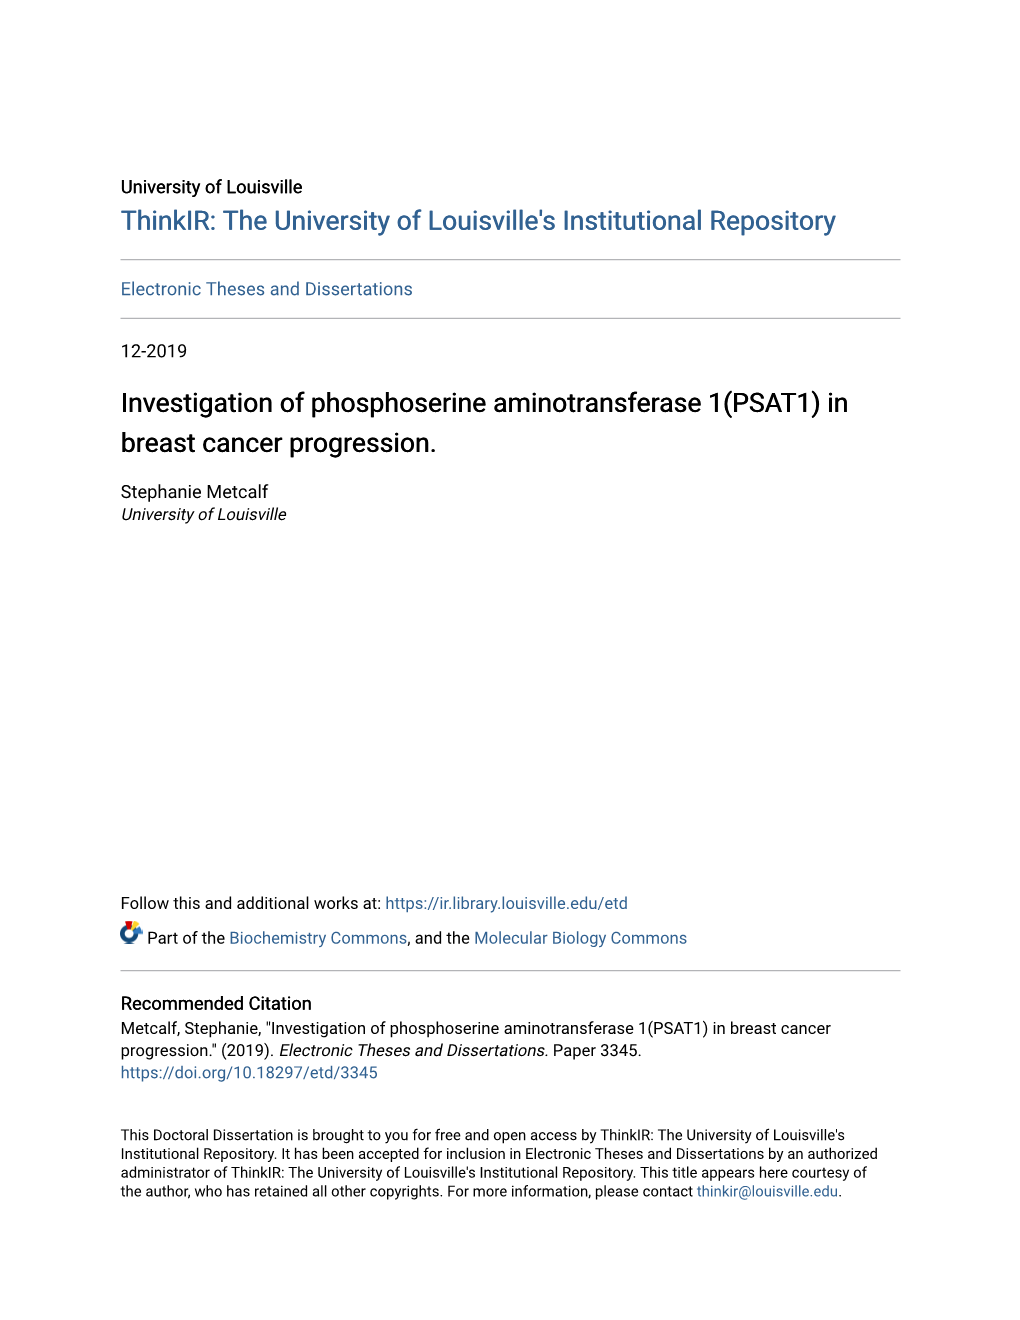 Investigation of Phosphoserine Aminotransferase 1(PSAT1) in Breast Cancer Progression